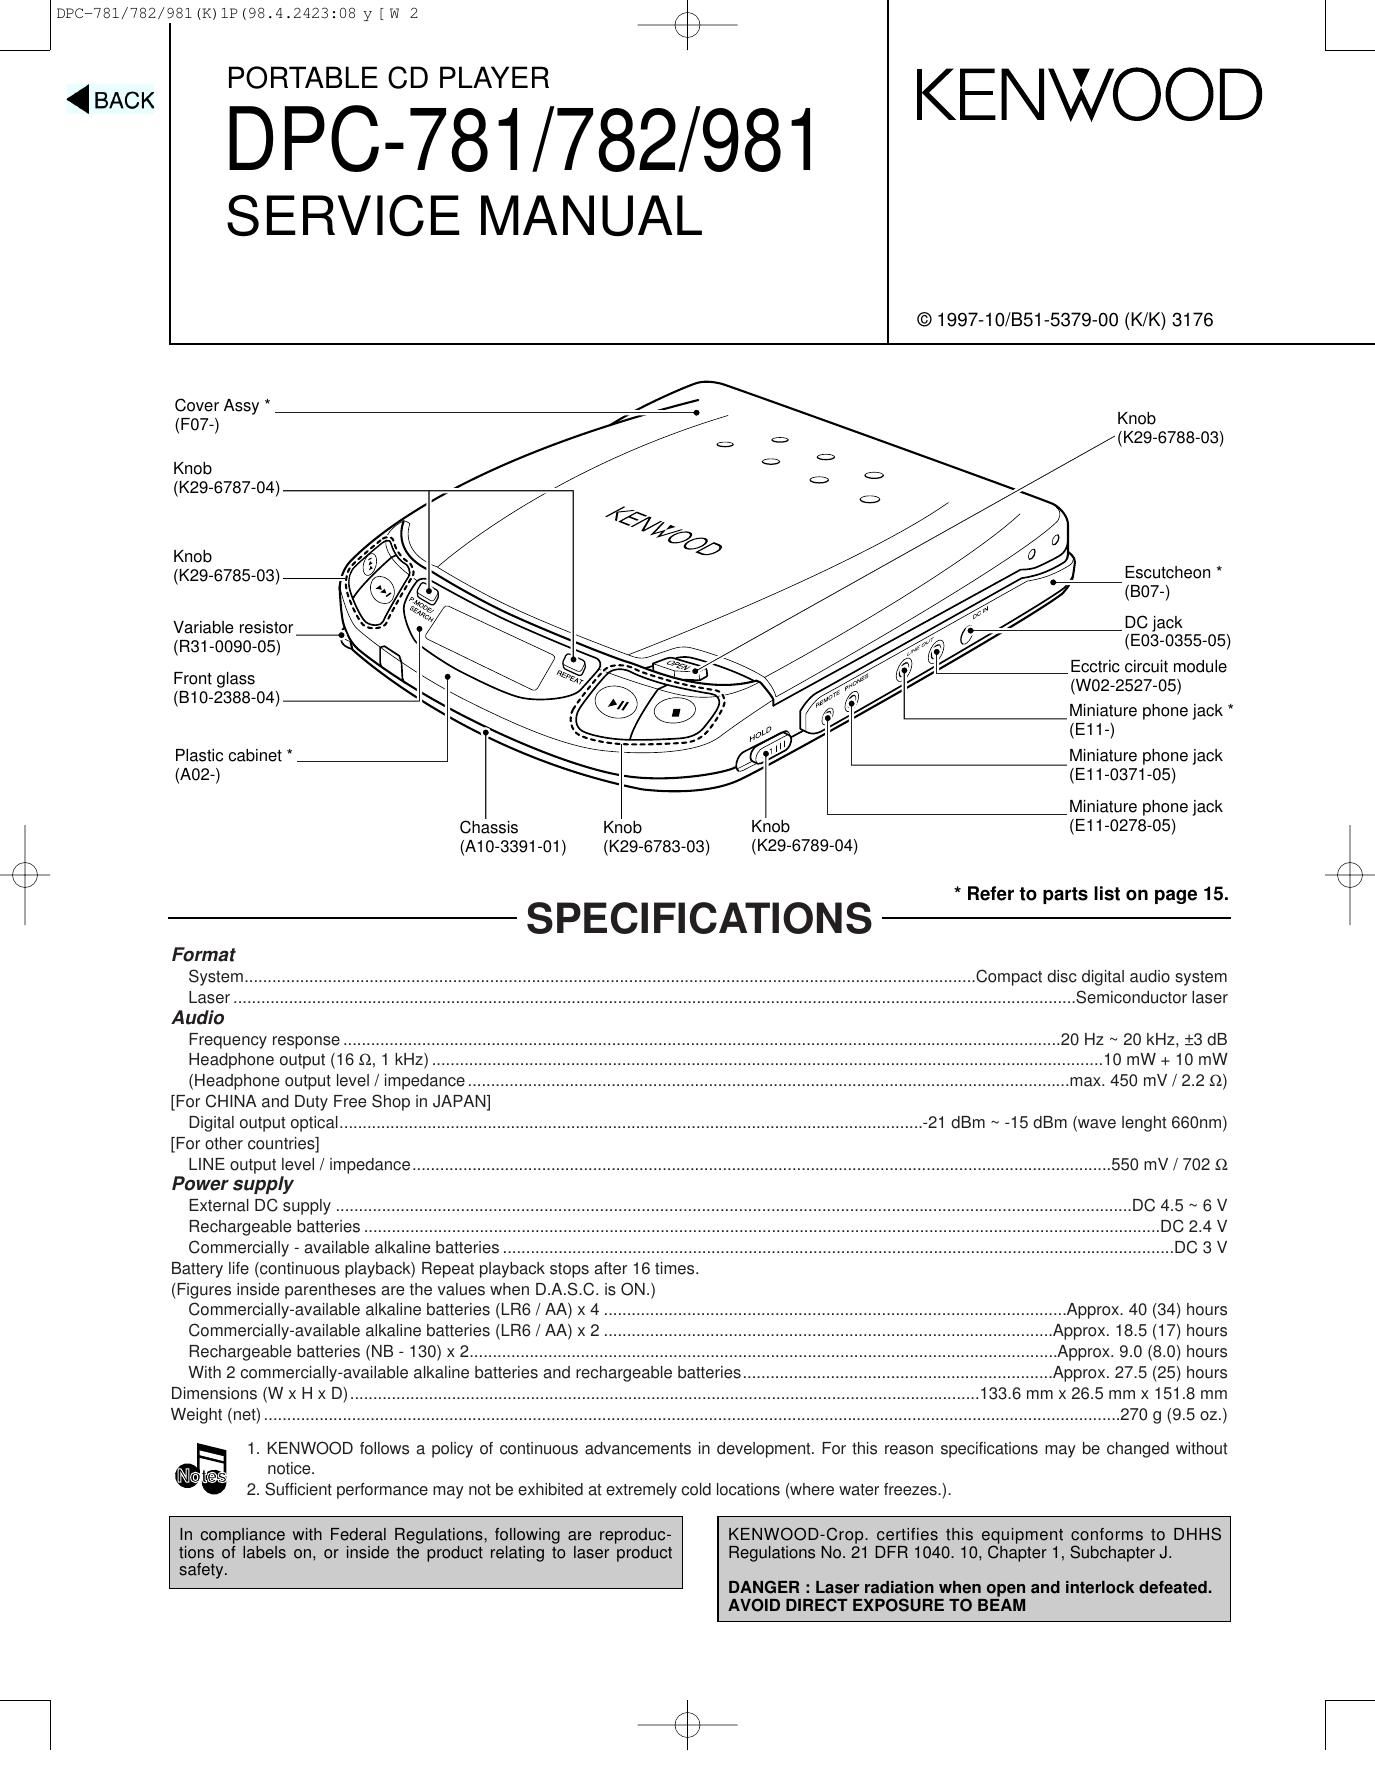 Kenwood DPC 781 Service Manual